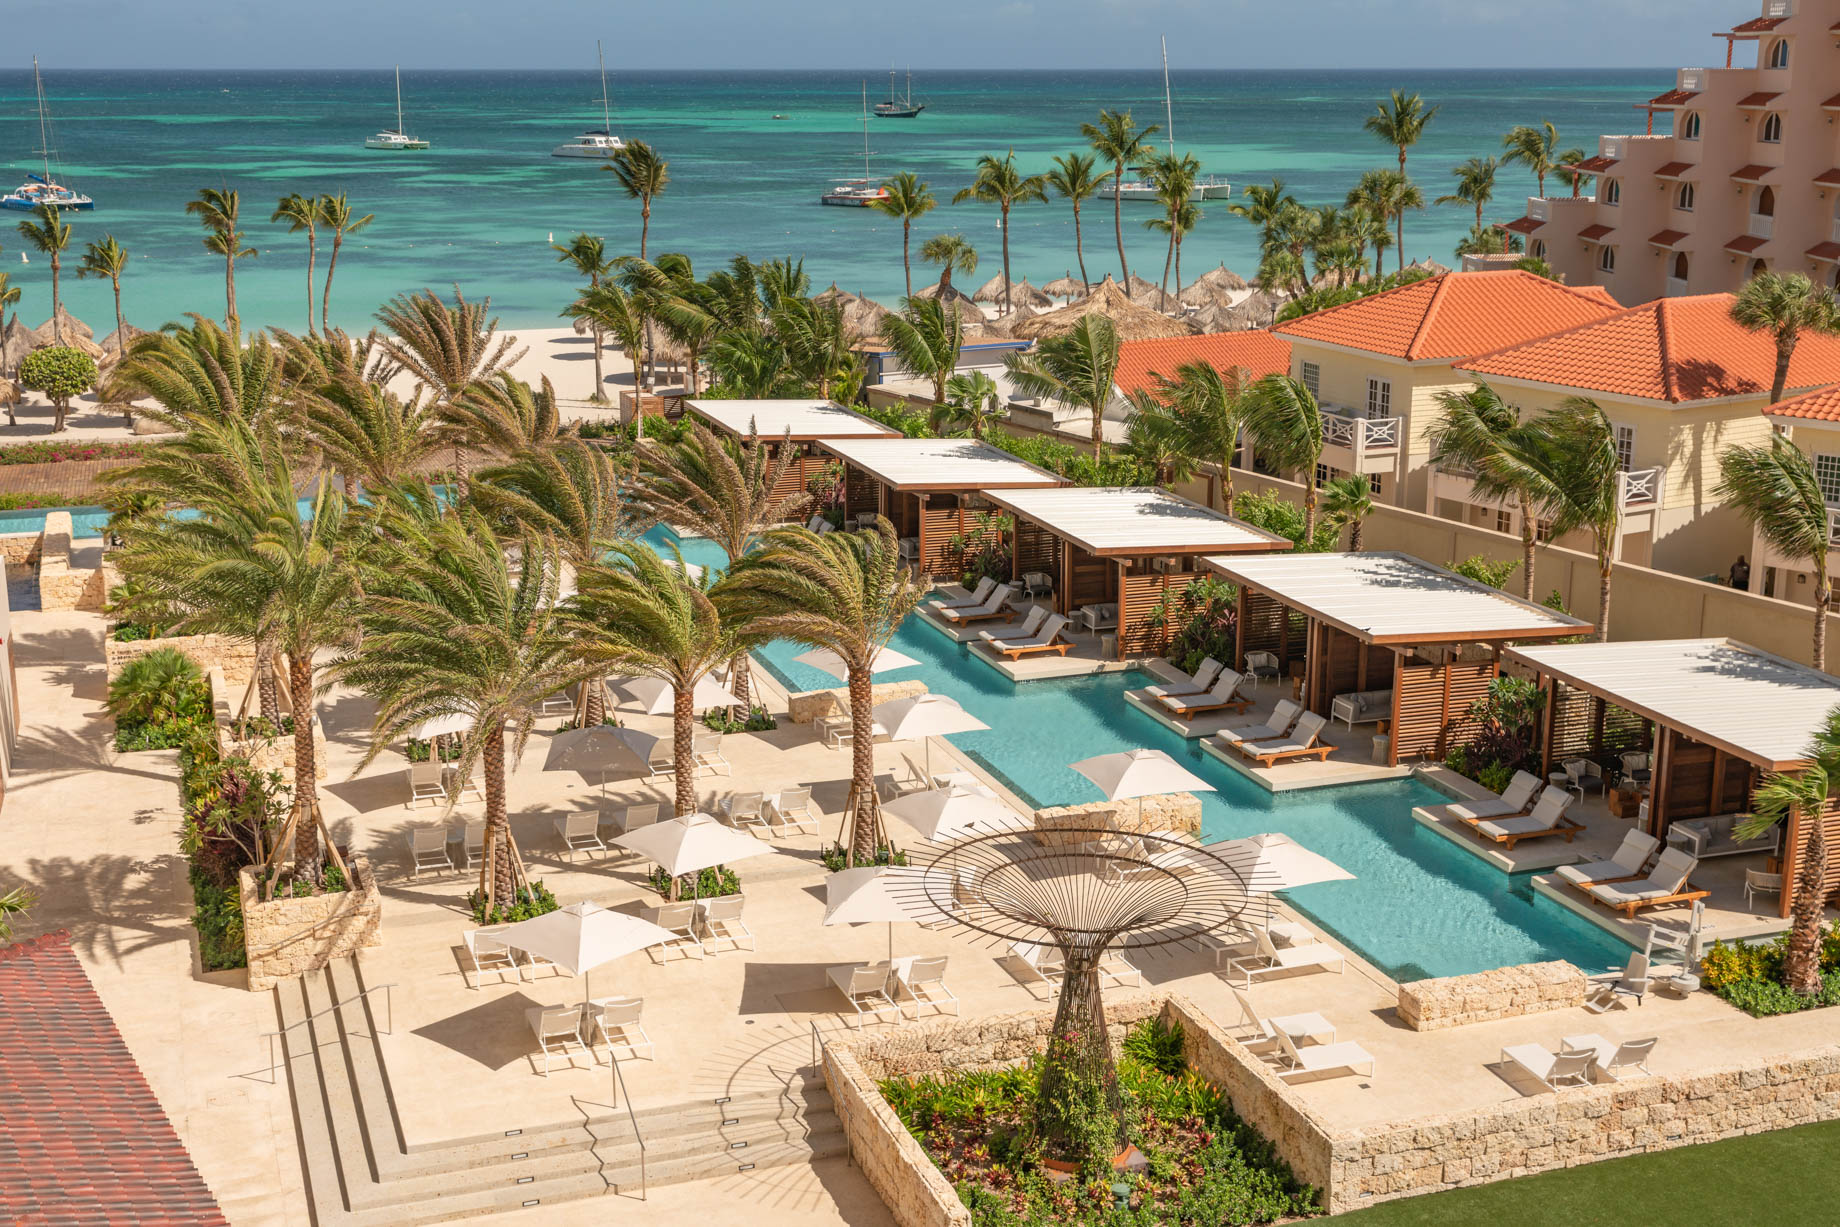 Hyatt Regency Aruba Resort & Casino - Noord, Aruba - Pool Deck Cabanas Aerial View